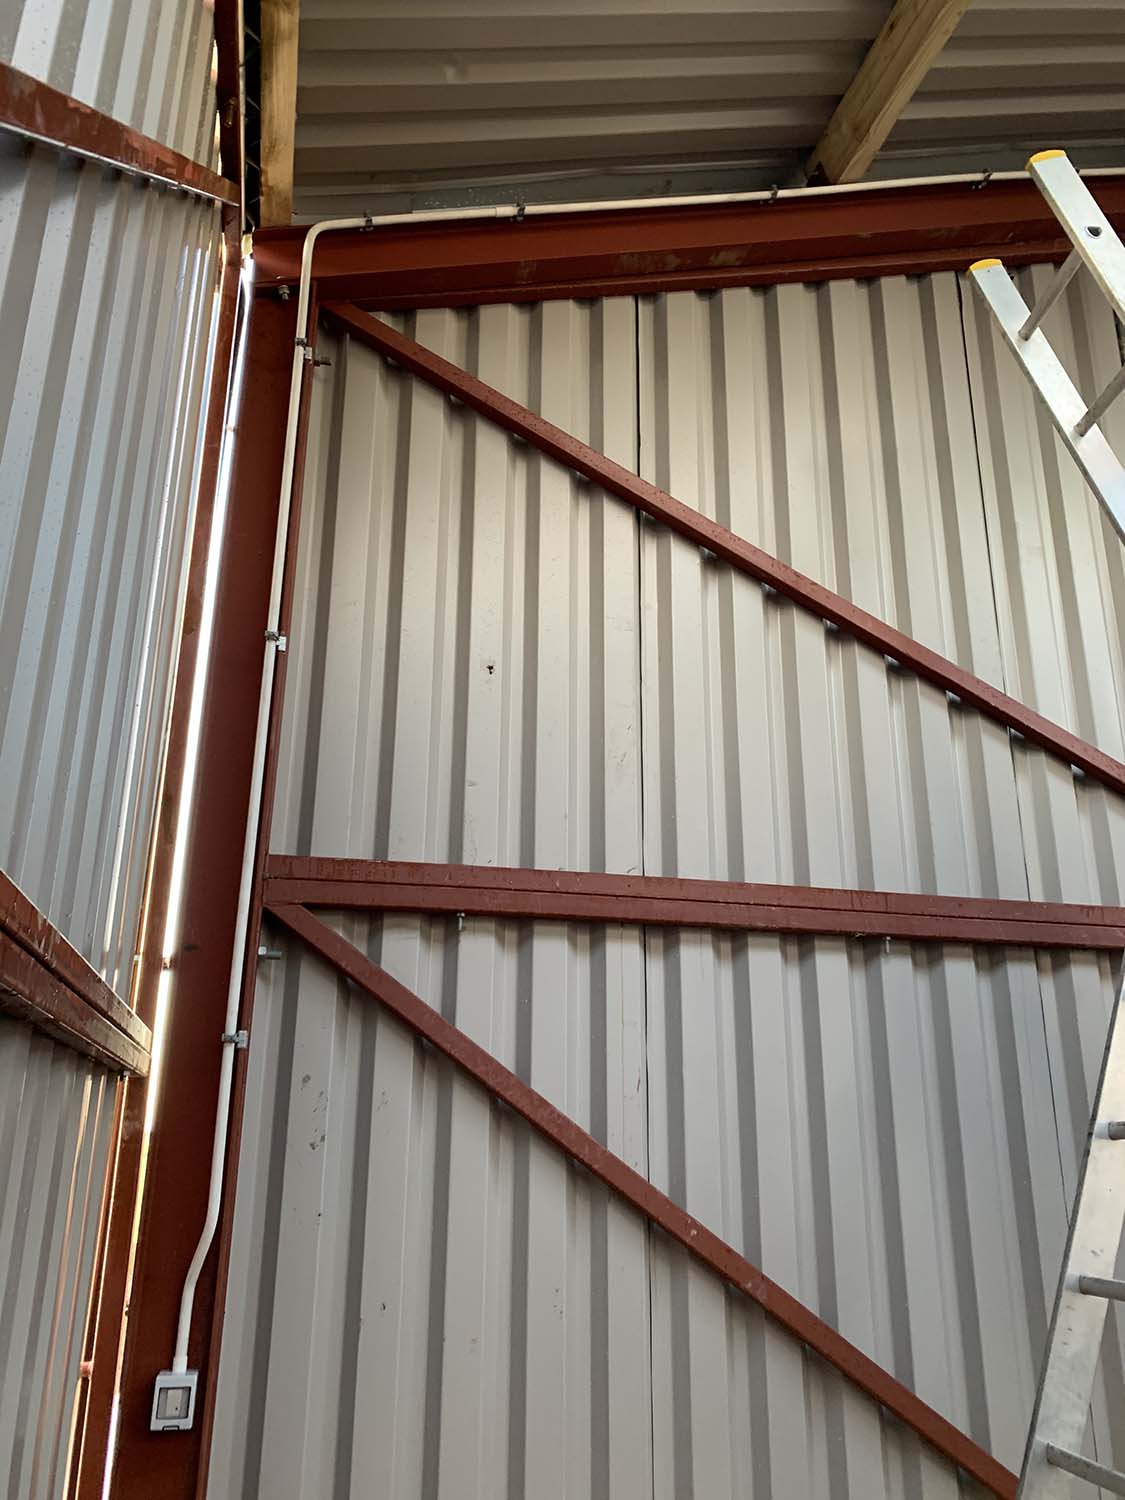 Lighting system installed in steel farm building